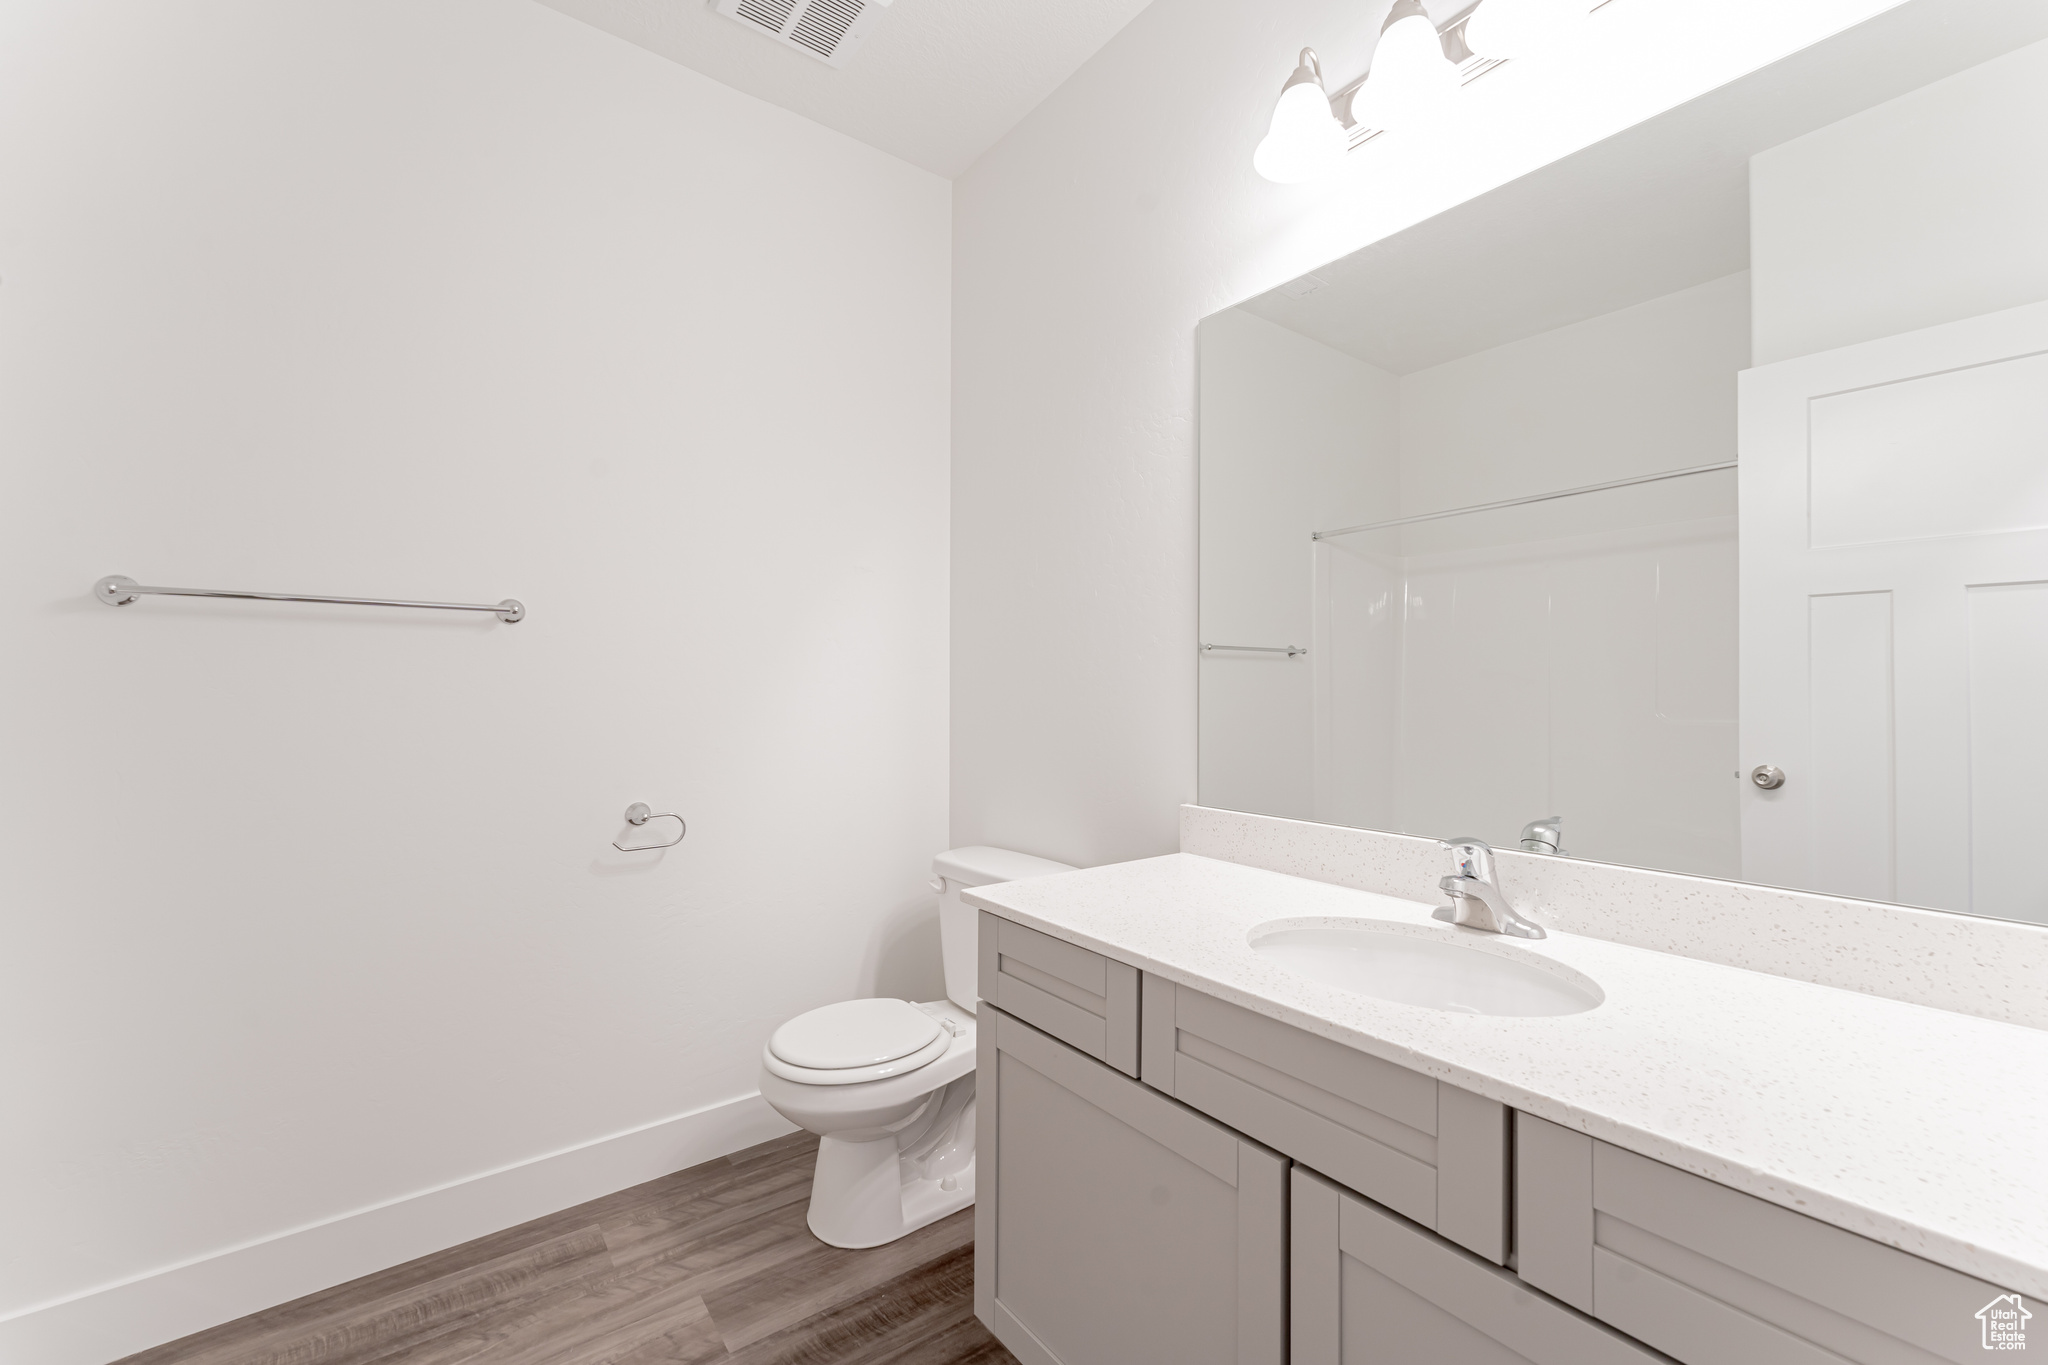 Bathroom featuring toilet, large vanity, and wood-type flooring